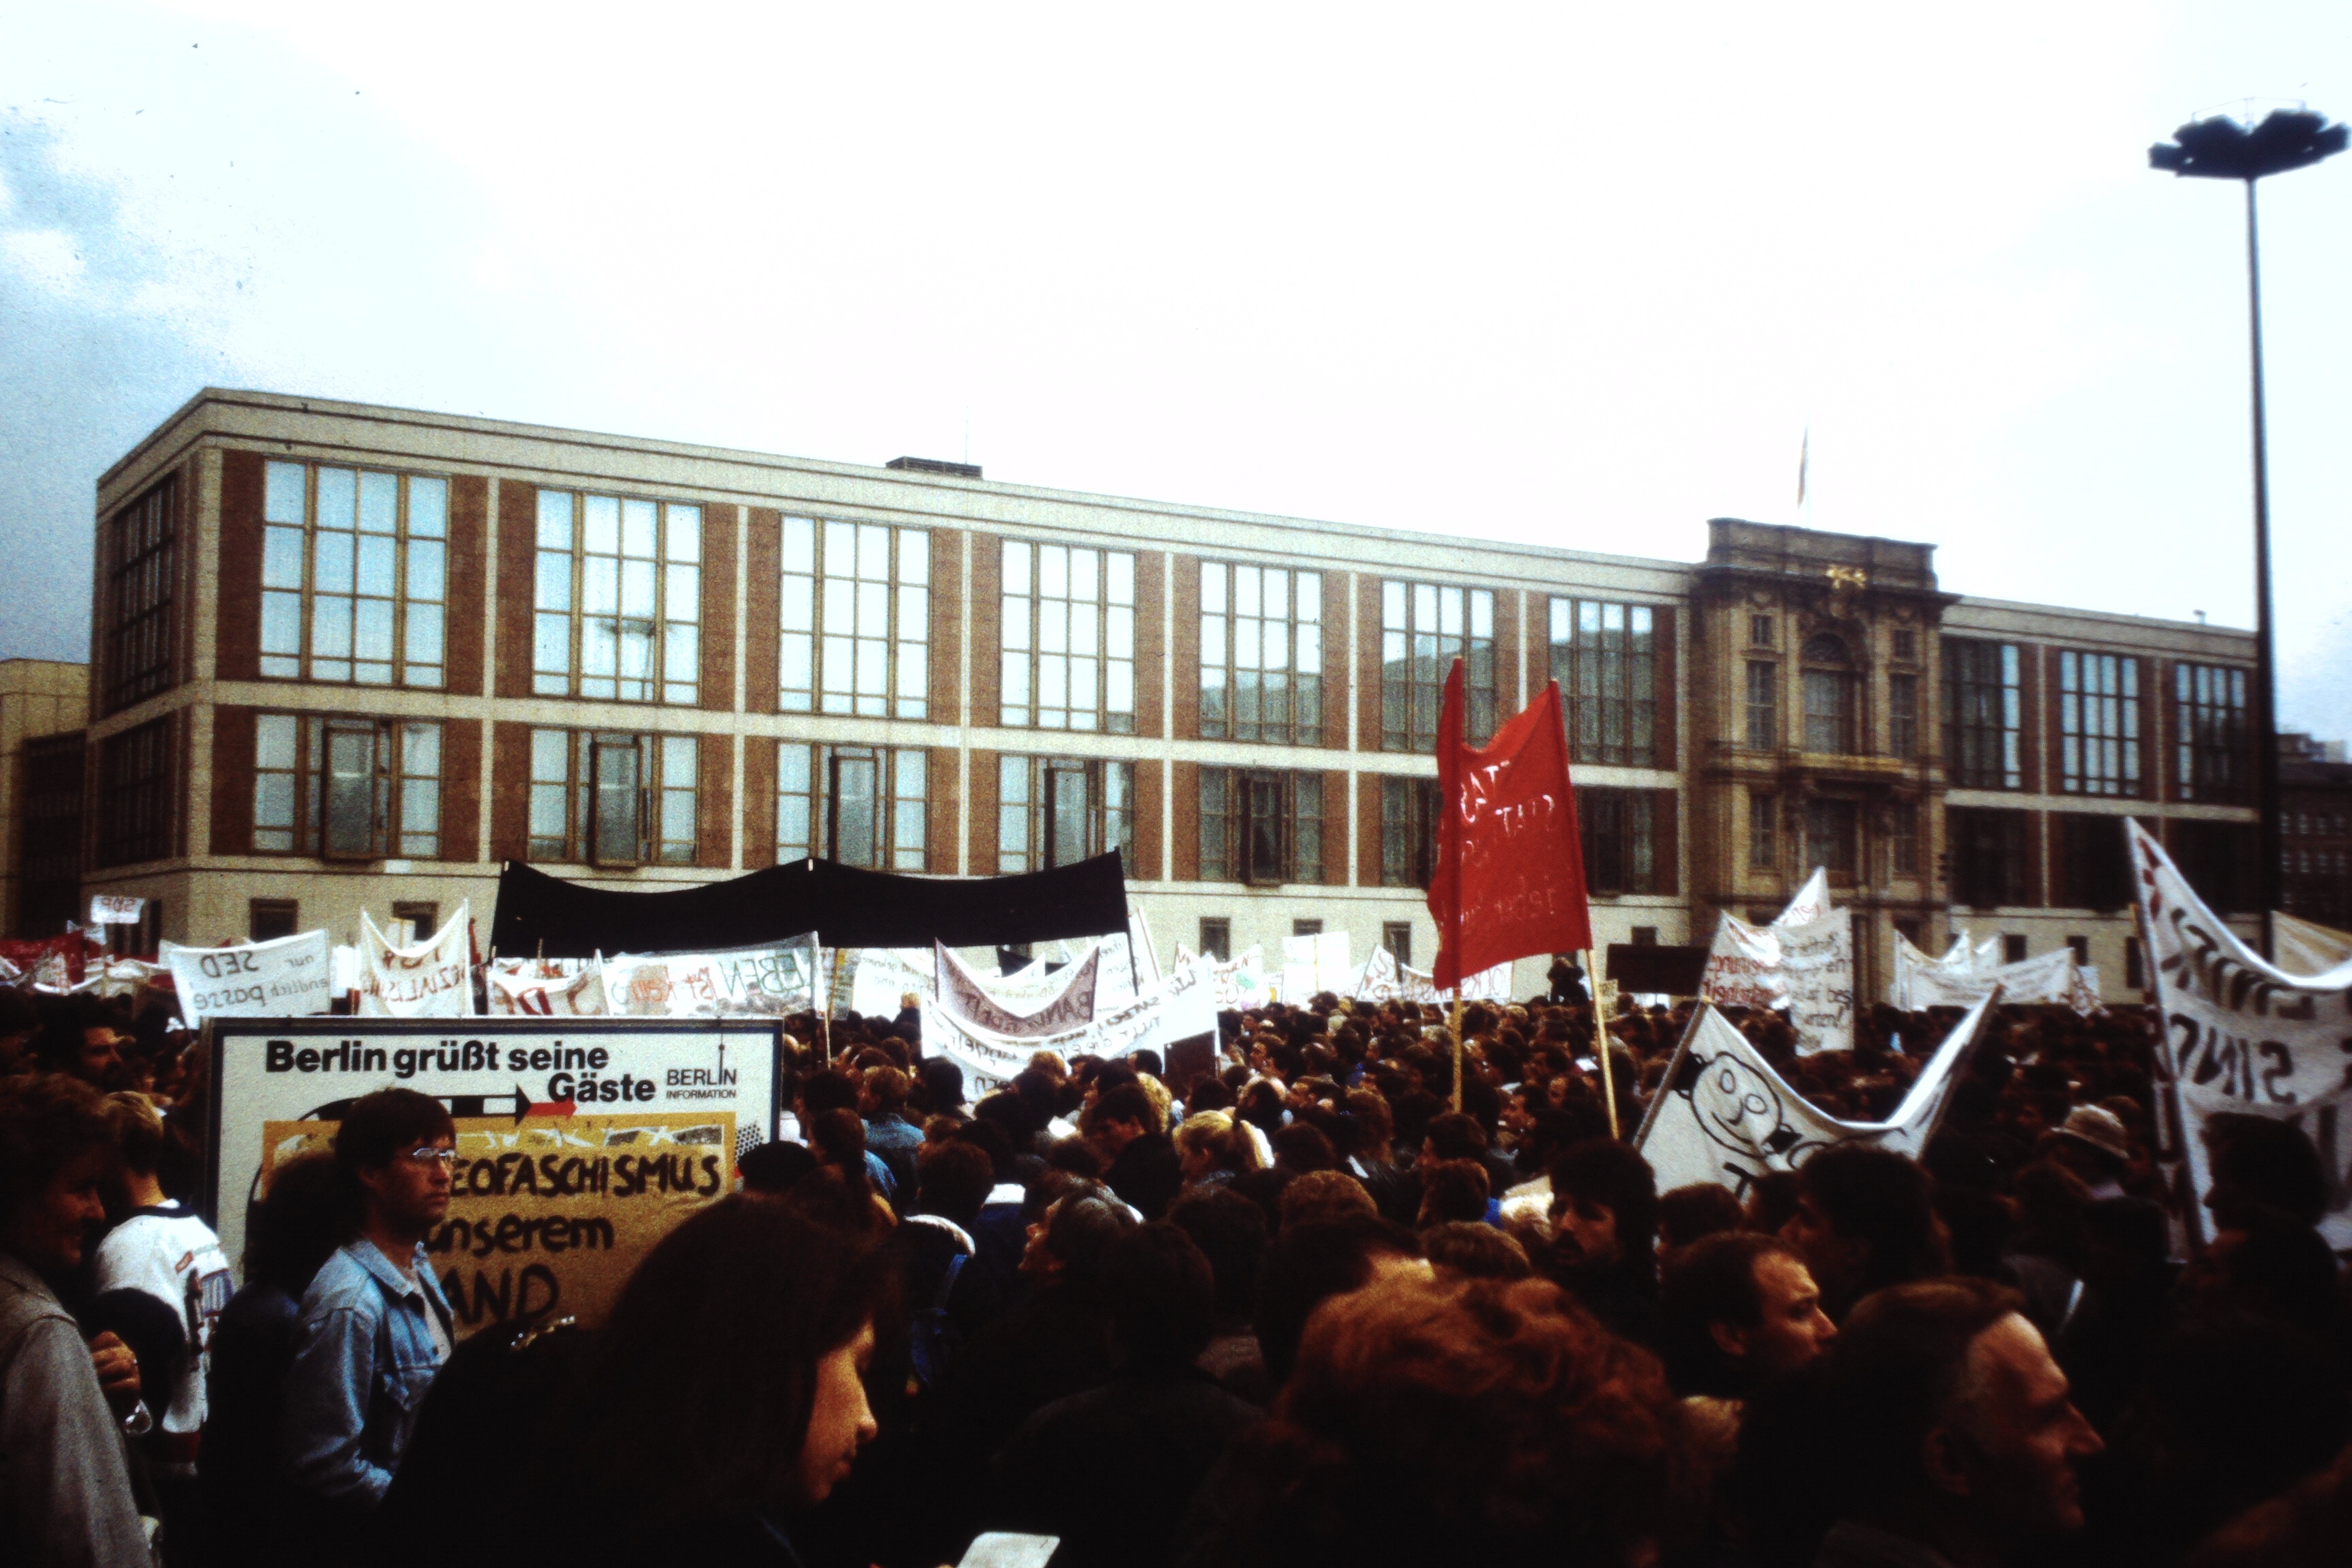 Großdemonstration in Ost-Berlin am 04. November 1989: Demonstranten vor dem Staatsratsgebäude (DDR Geschichtsmuseum im Dokumentationszentrum Perleberg CC BY-SA)